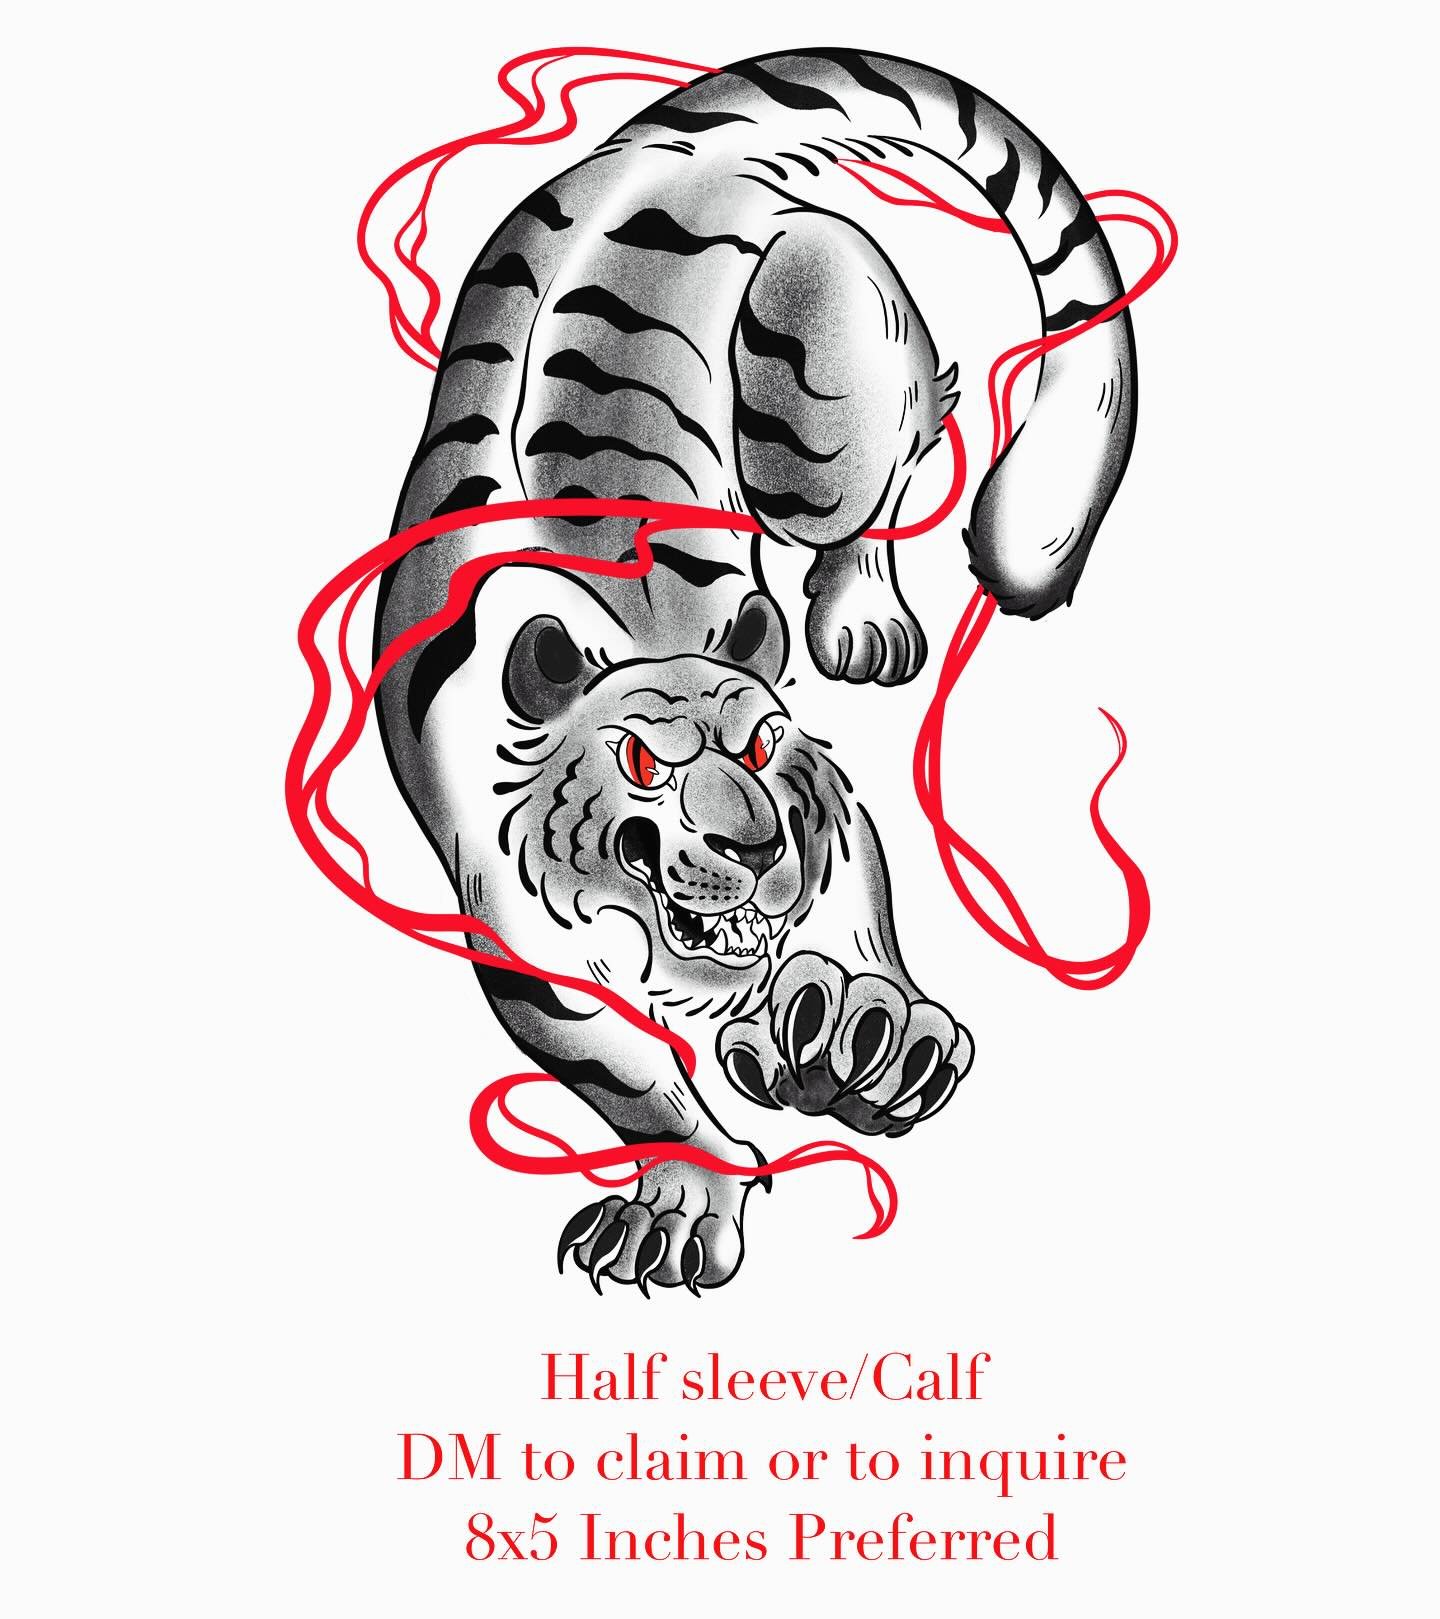 🐅Red Tiger ❤️ Design Available
DM for details or to claim
.
.
.
.
.
.
.
#tigerdesign #tigertattoo #georgiatattoo #atlantatattooartist